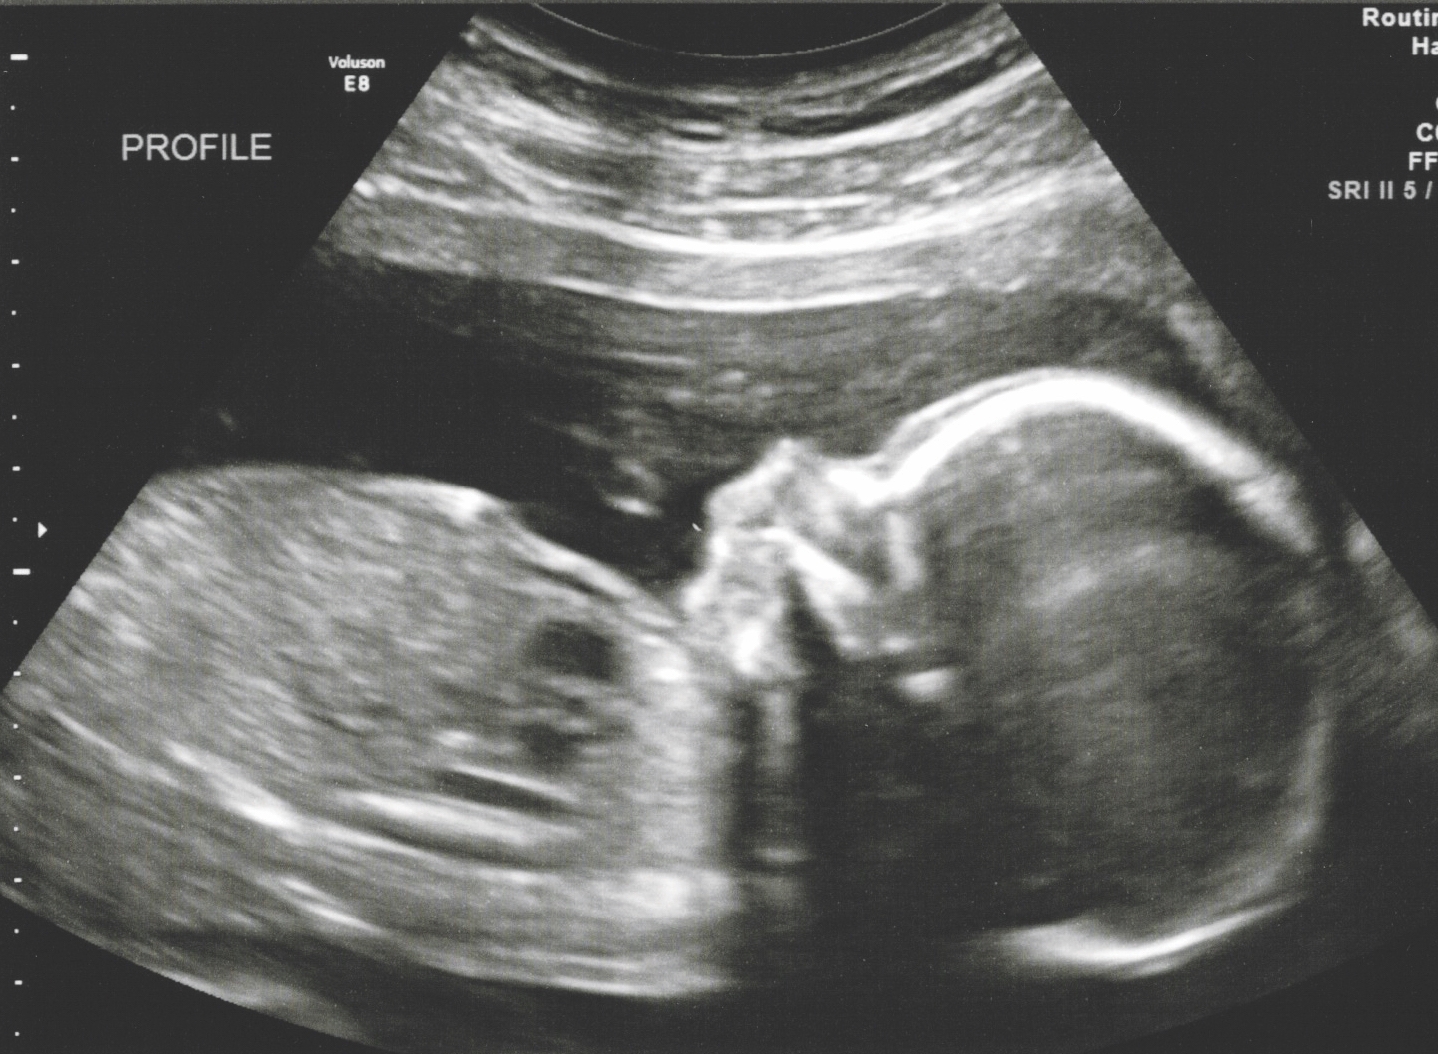 Nolan Baby 19 weeks image 2.jpg